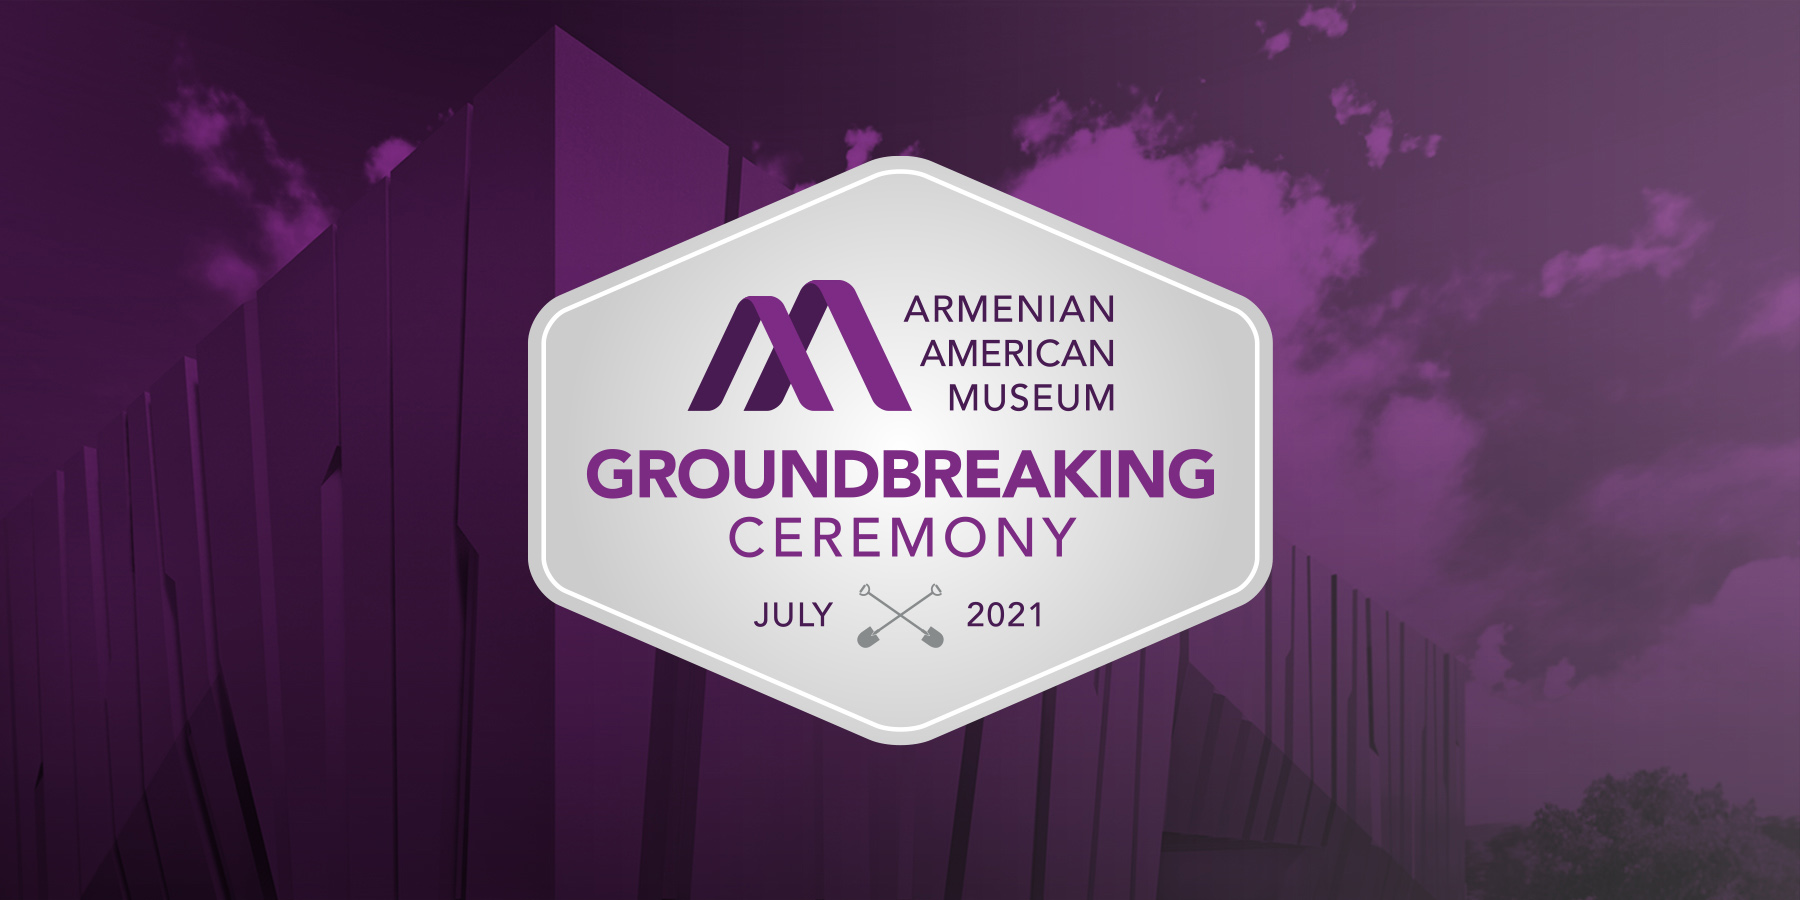 Armenian American Museum Groundbreaking Ceremony Announcement Graphic